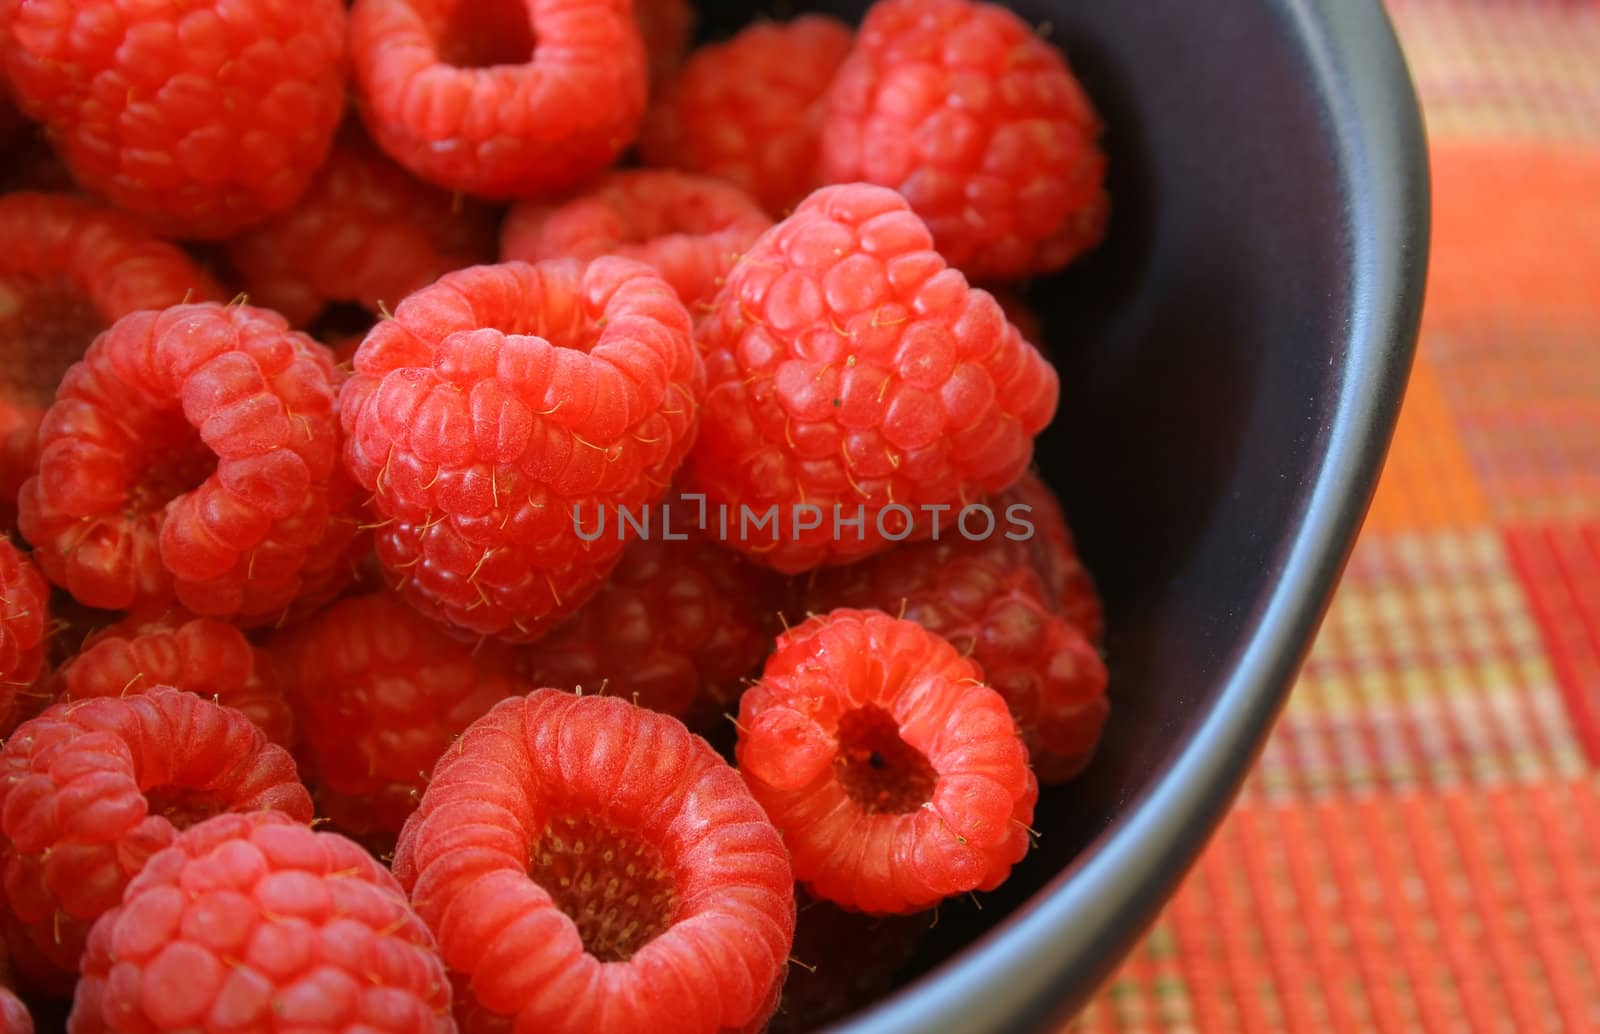 Sweet raspberries in a bowl

